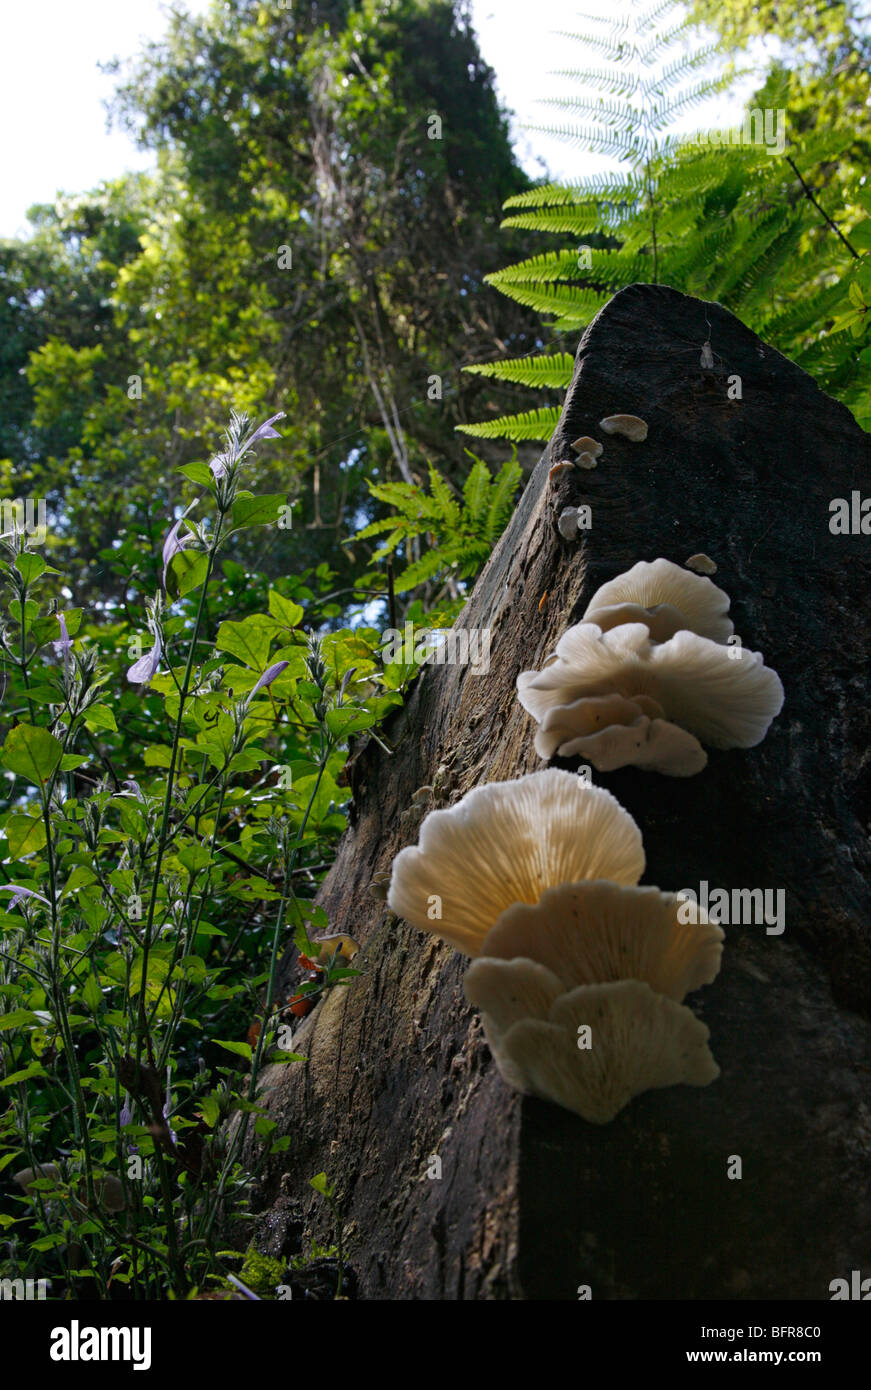 Bracket fungi growing on a log Stock Photo